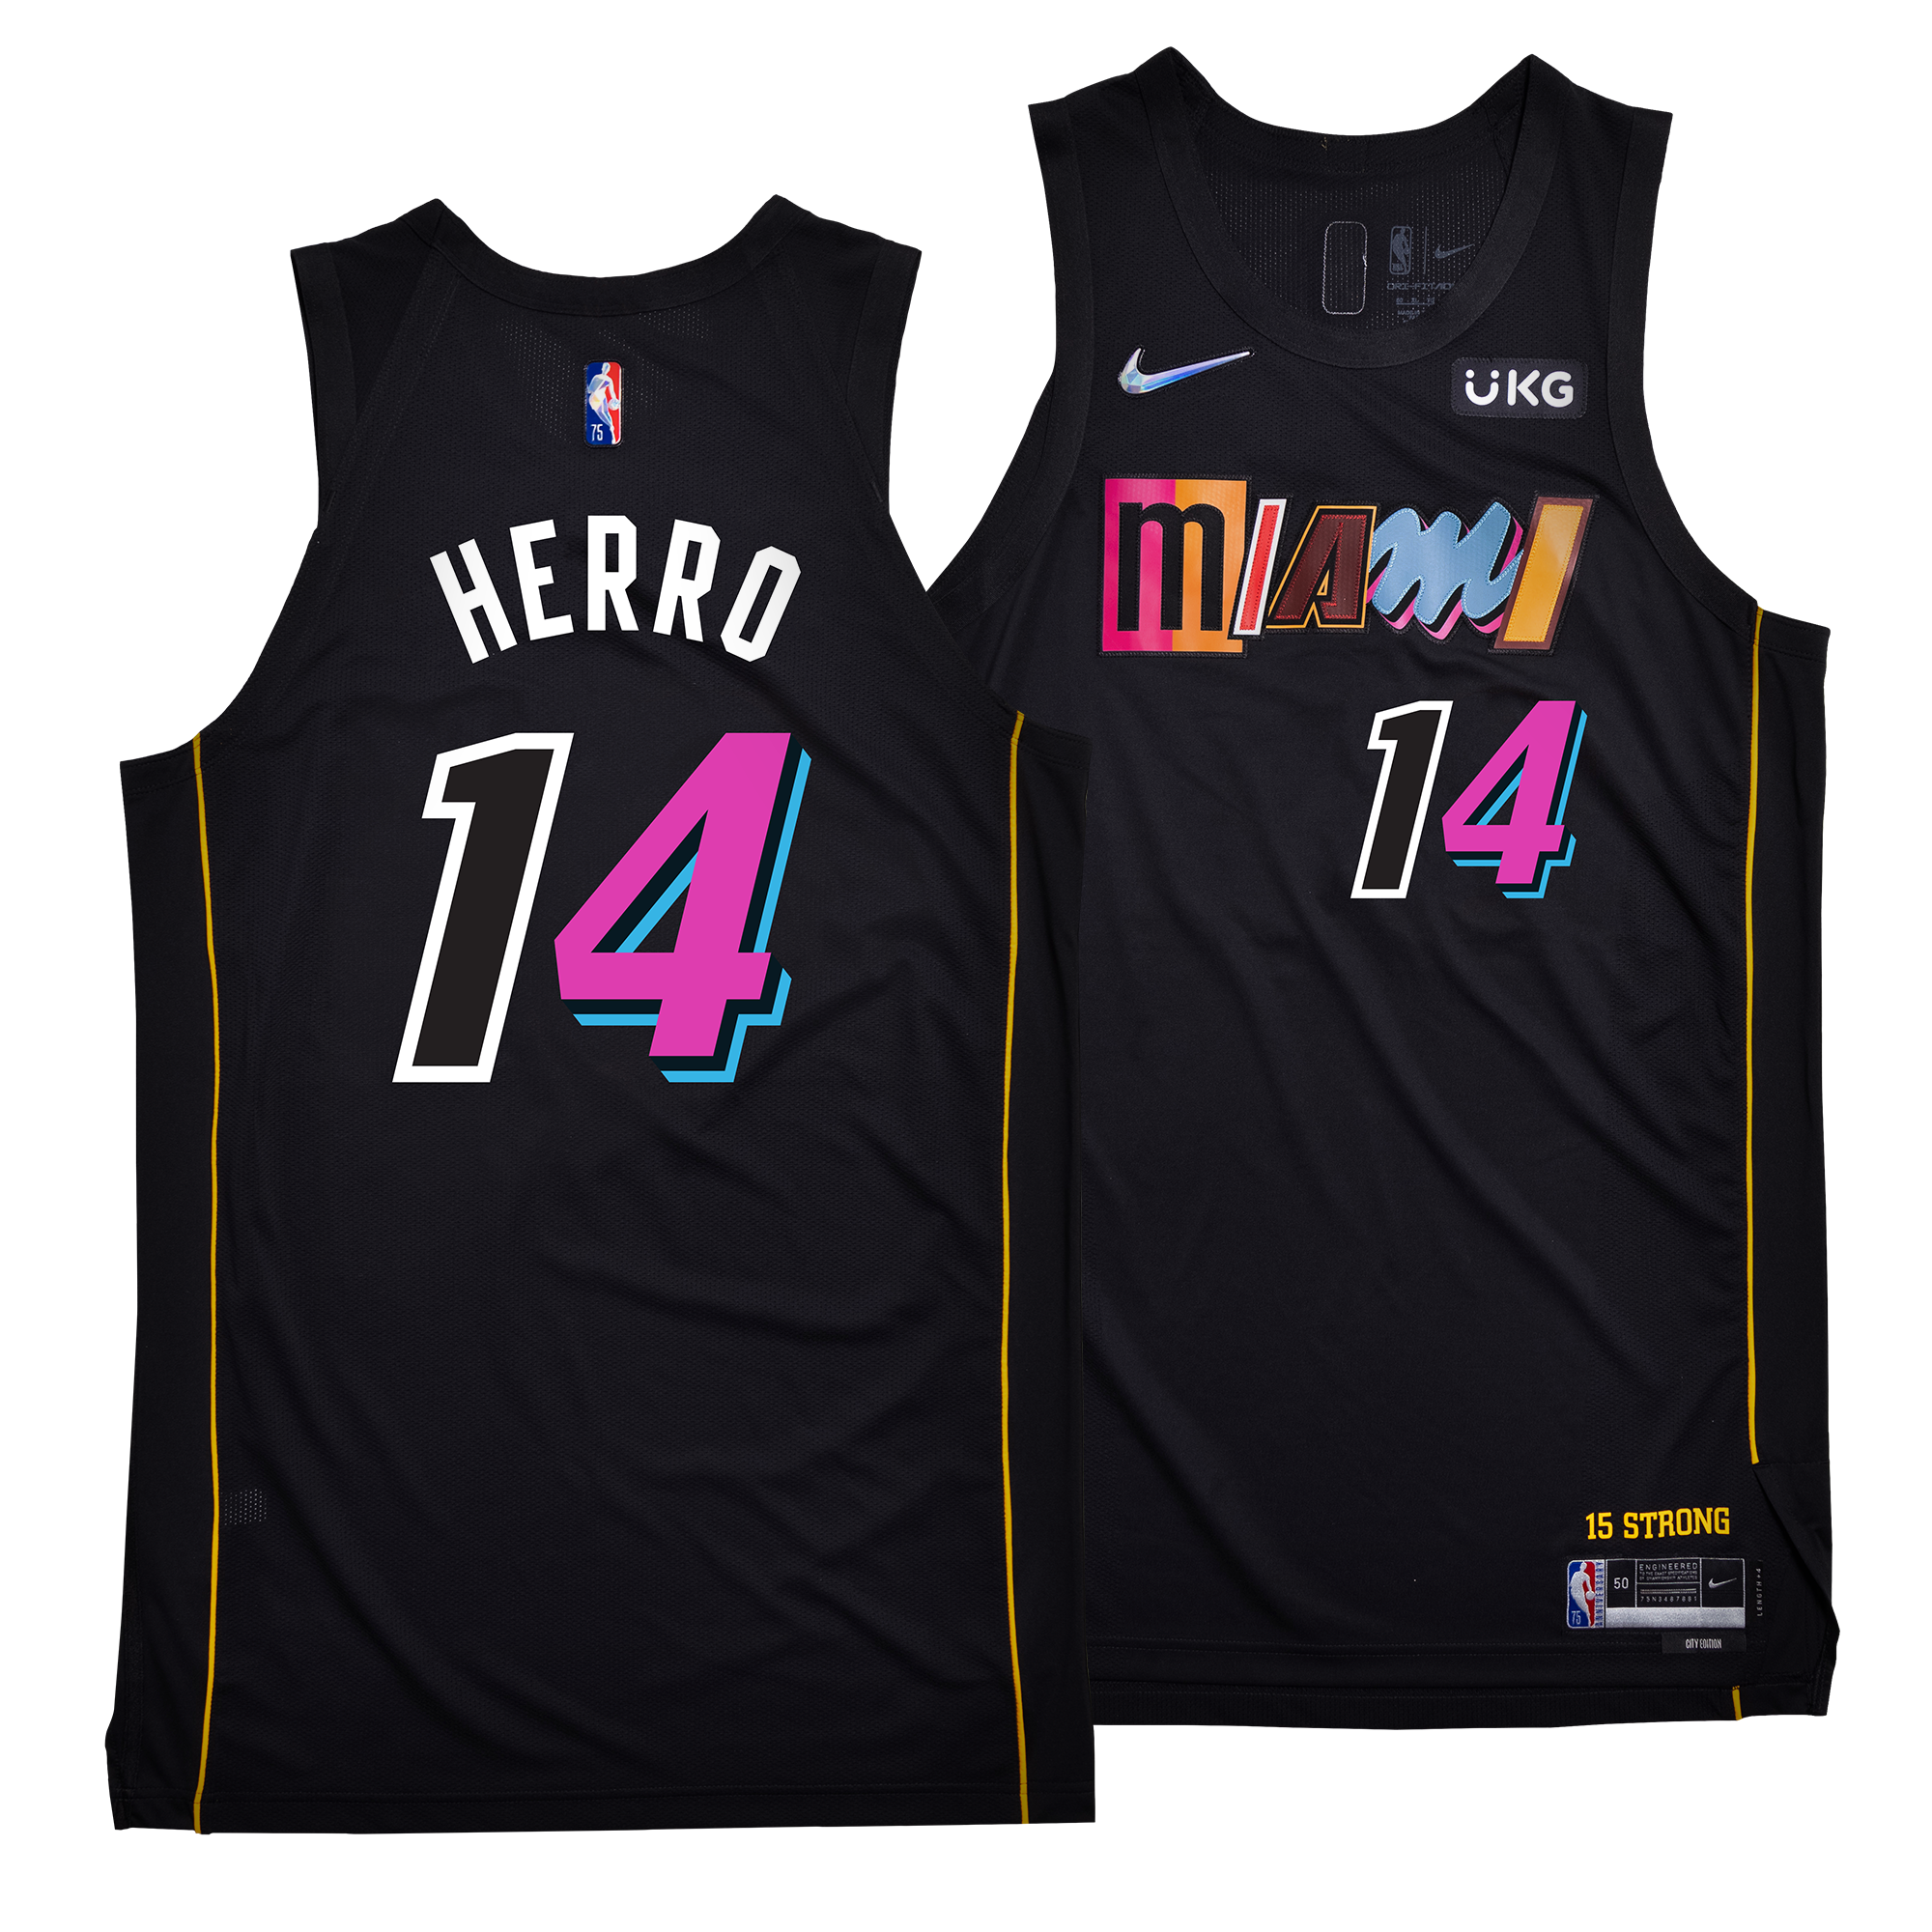 Miami Heat Tyler Herro Vice Nights Player Edition Jersey